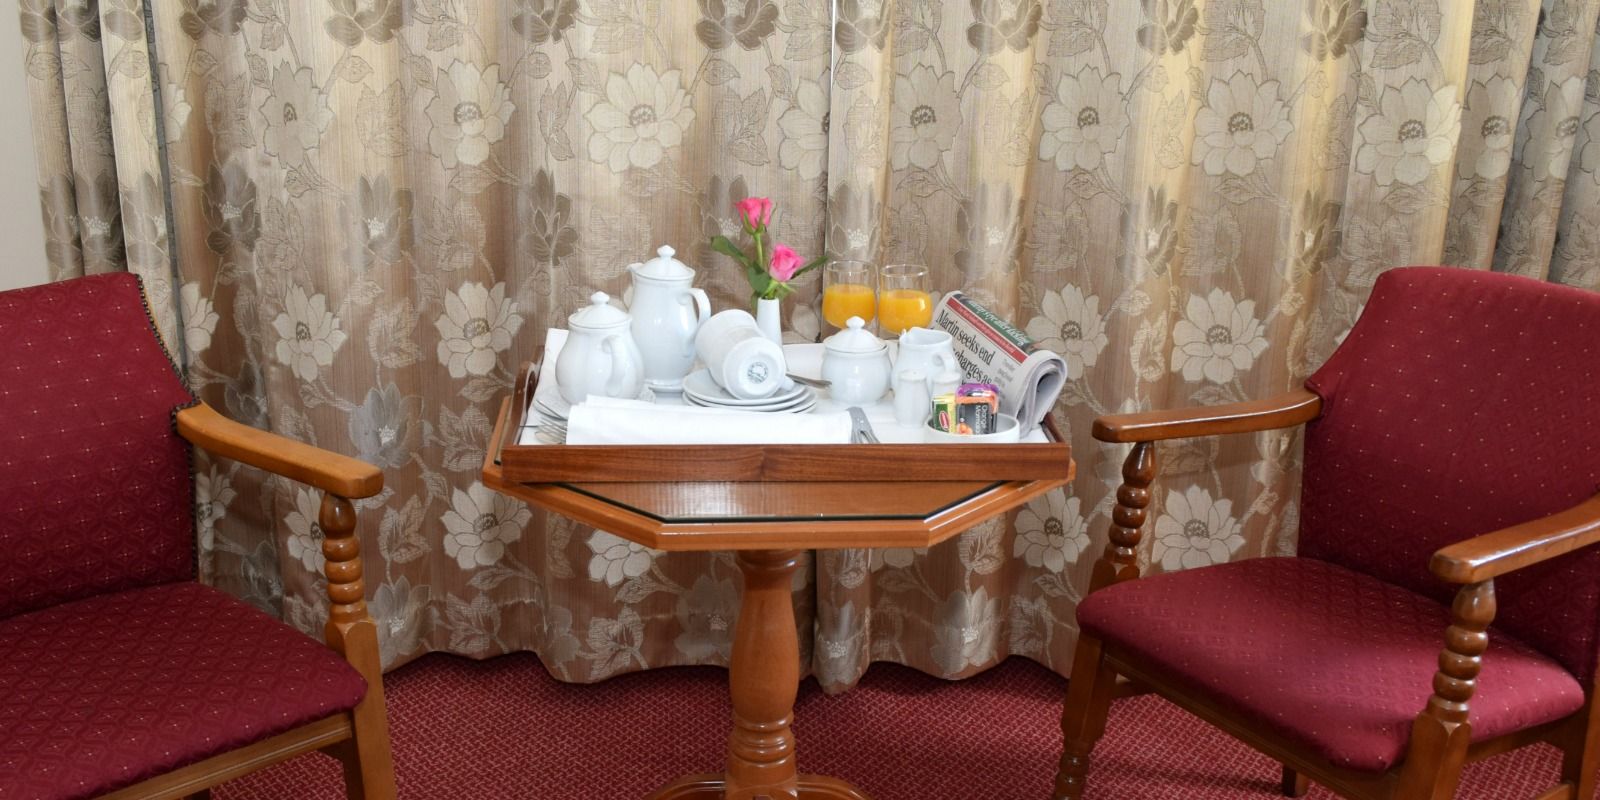 Room Service at the Rhu Glenn Hotel